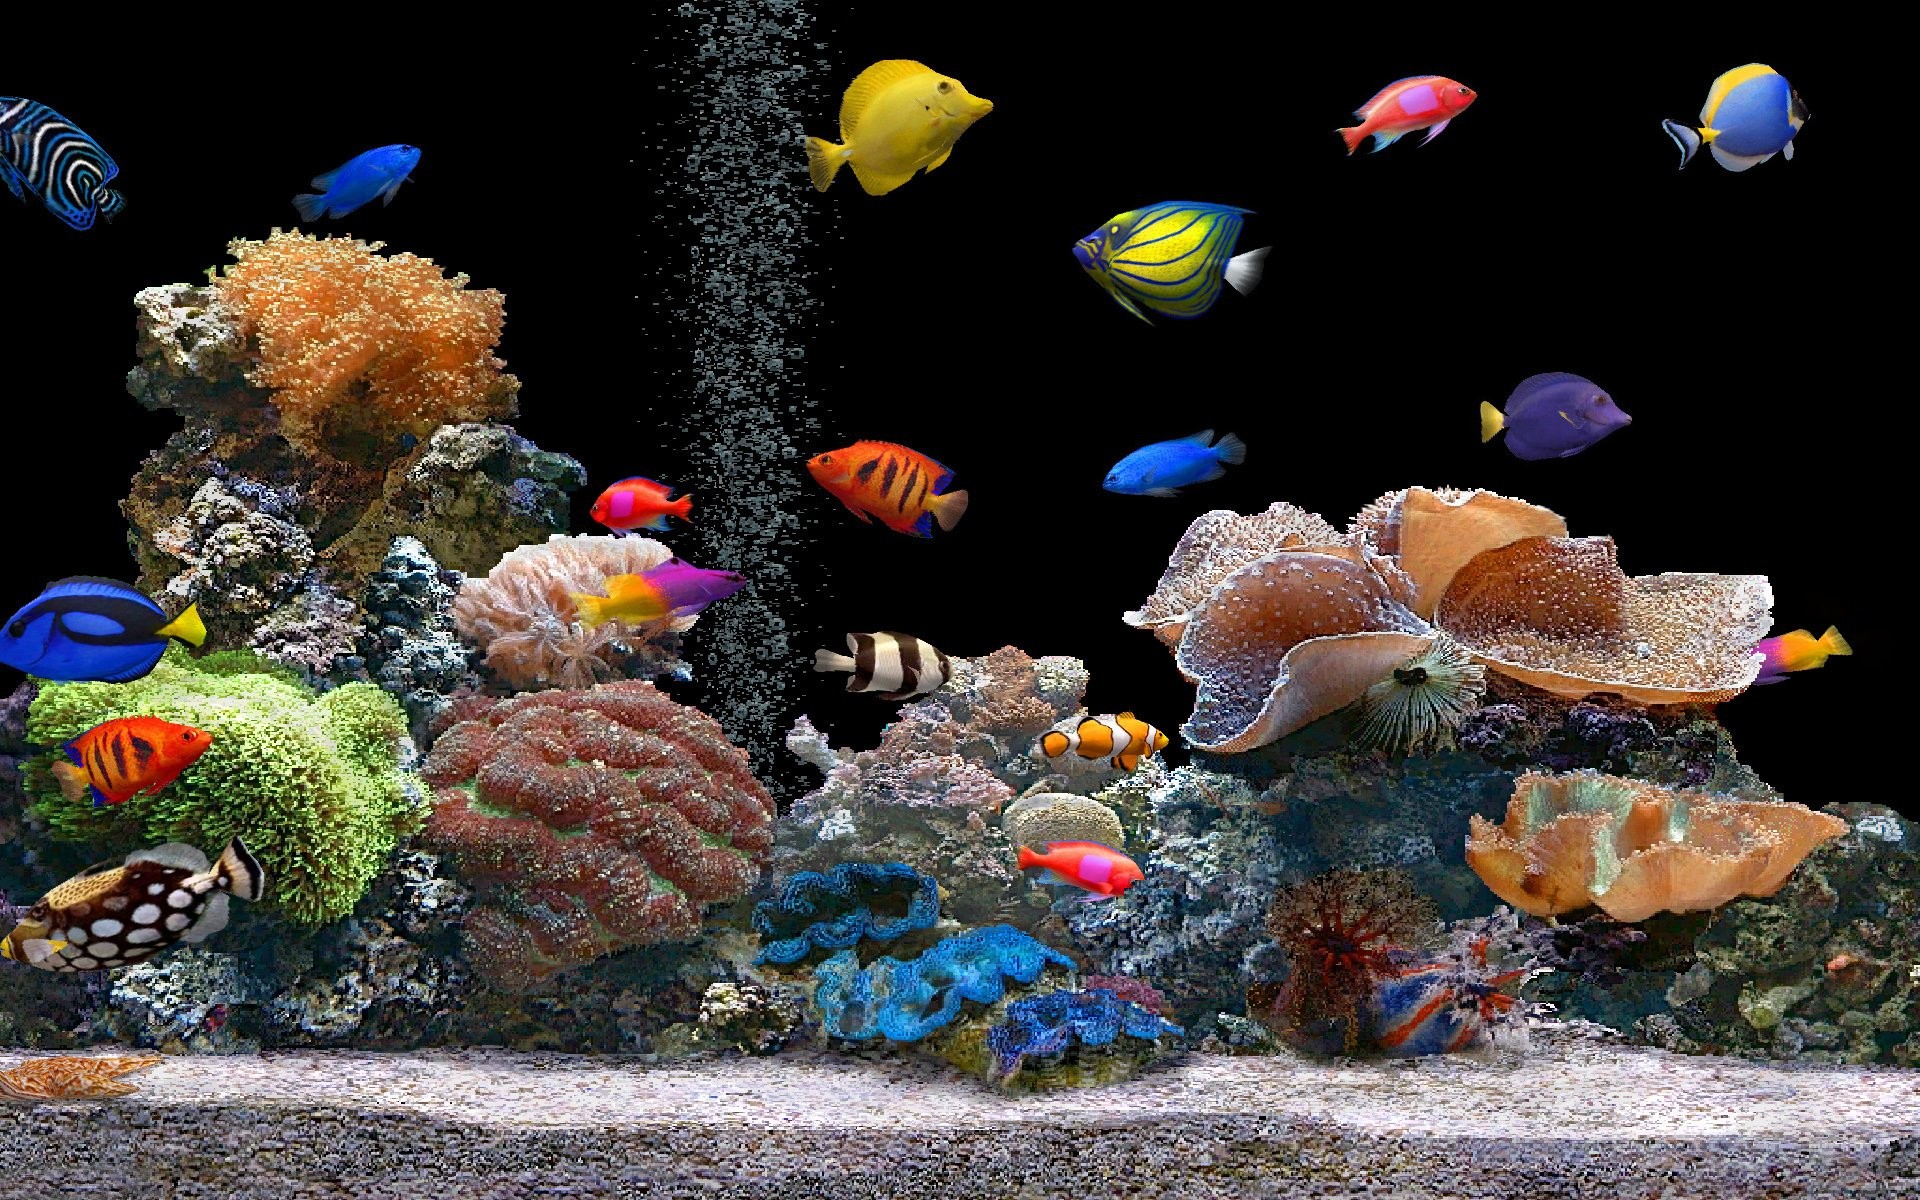 Full Size of Fish Tank Fish Tank Screensaver Windows Screensavers Free For Download Hk9pxs Fish Tankreensaver